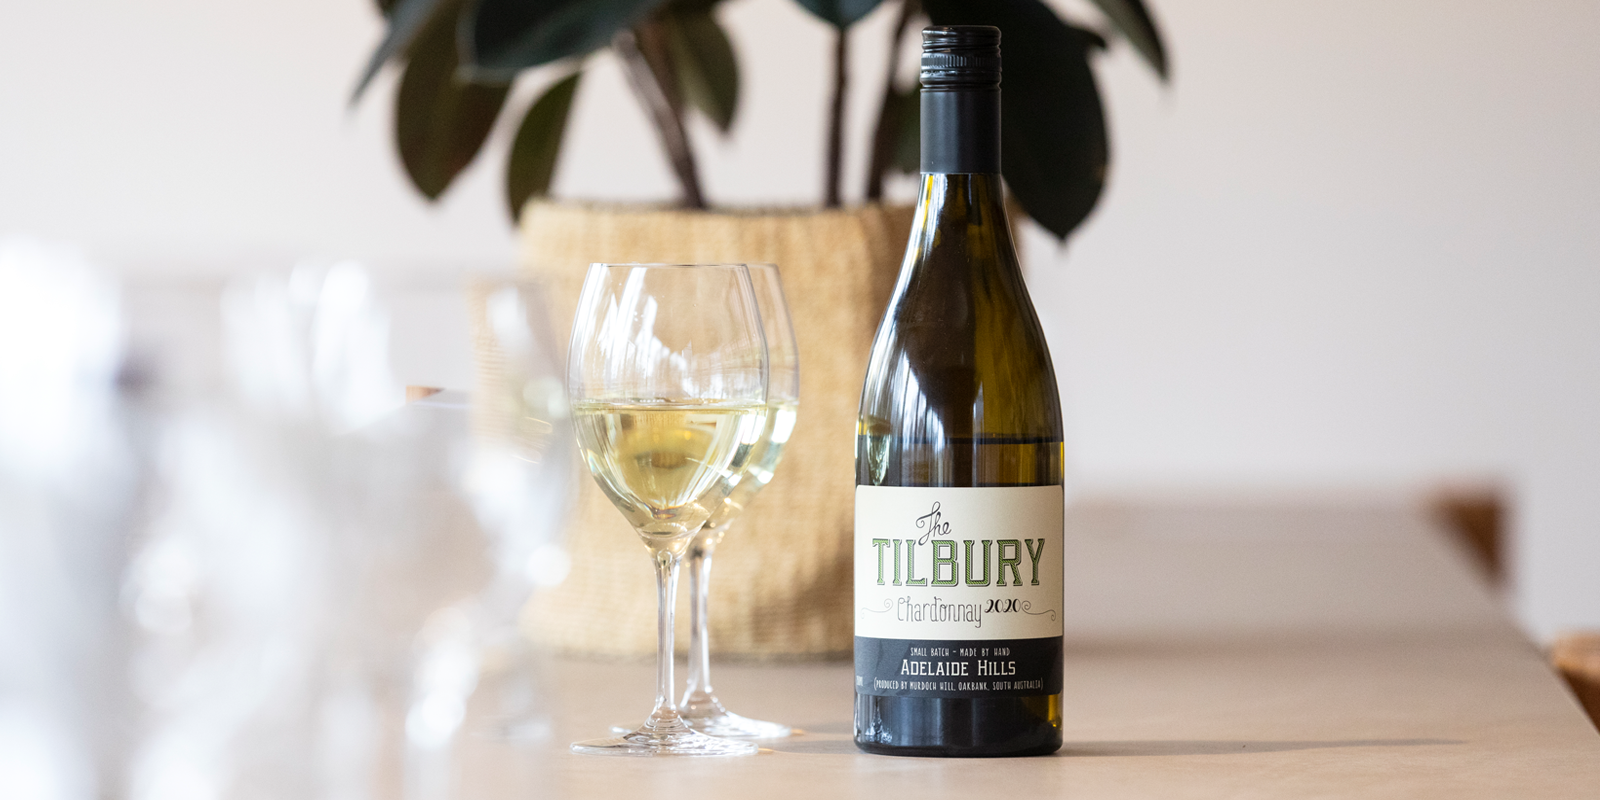 The Tilbury wine by Murdoch Hill.